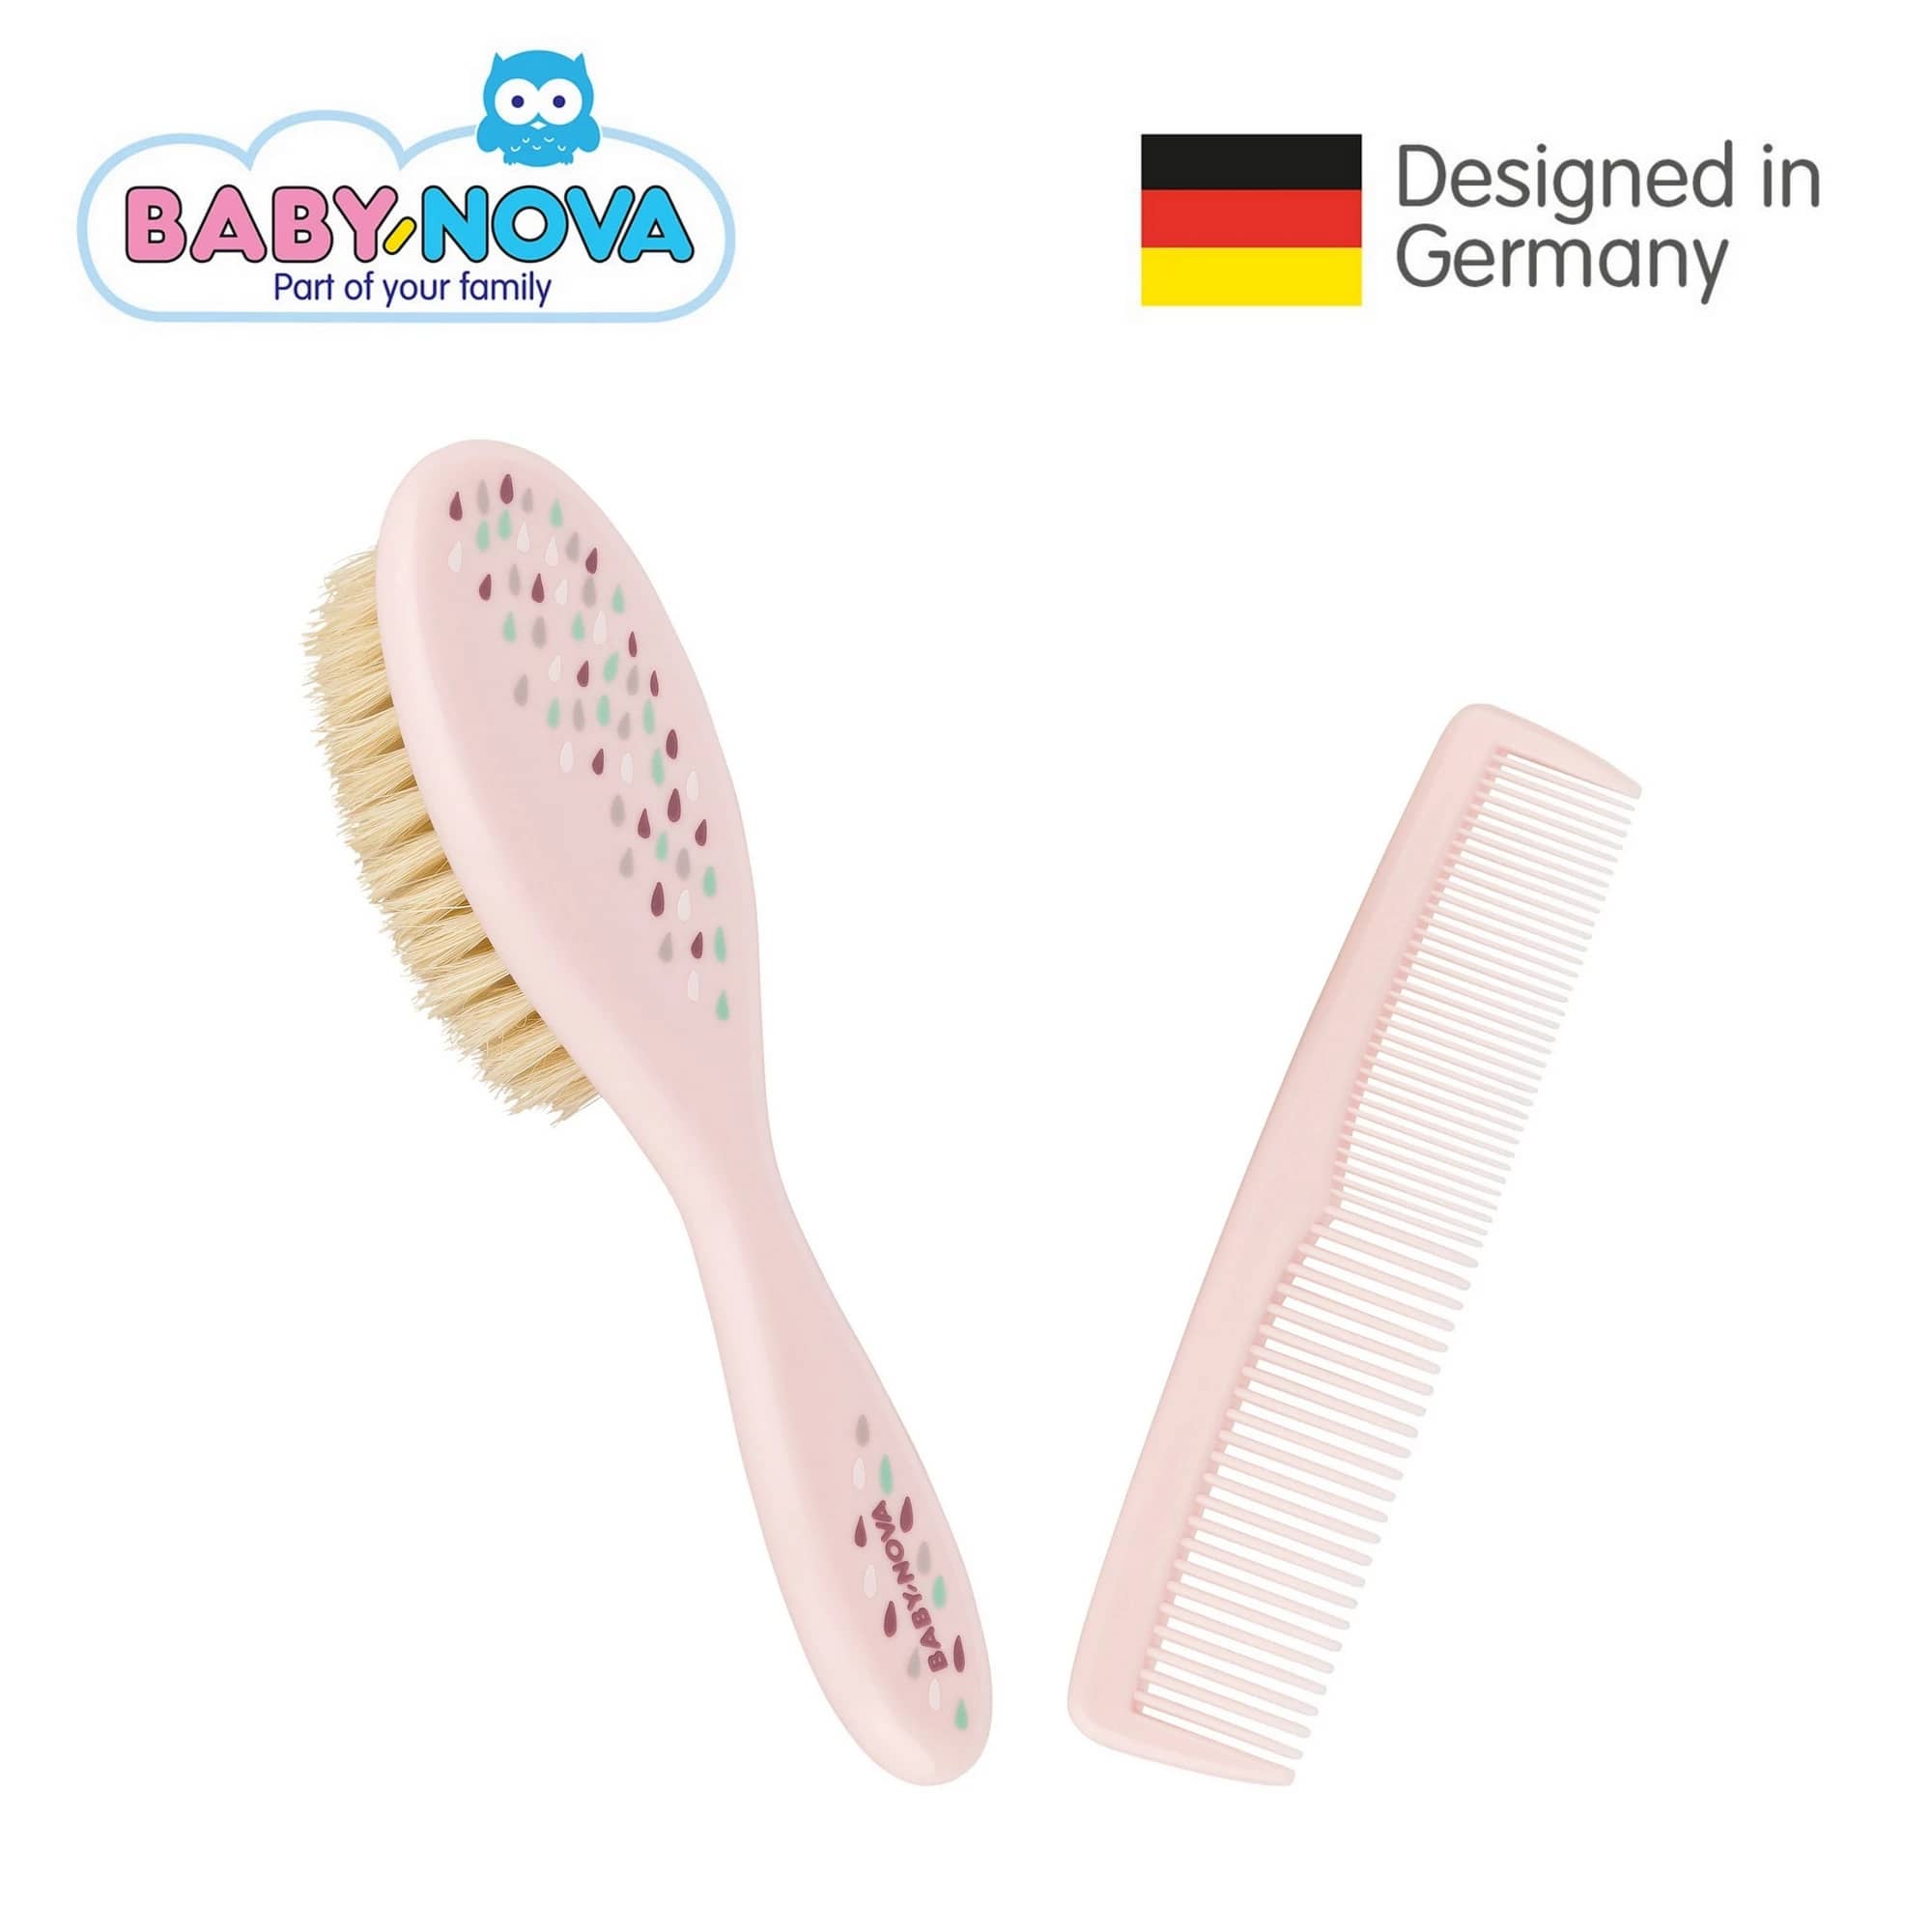 Baby Nova Brush & Comb Set with Natural Bristles